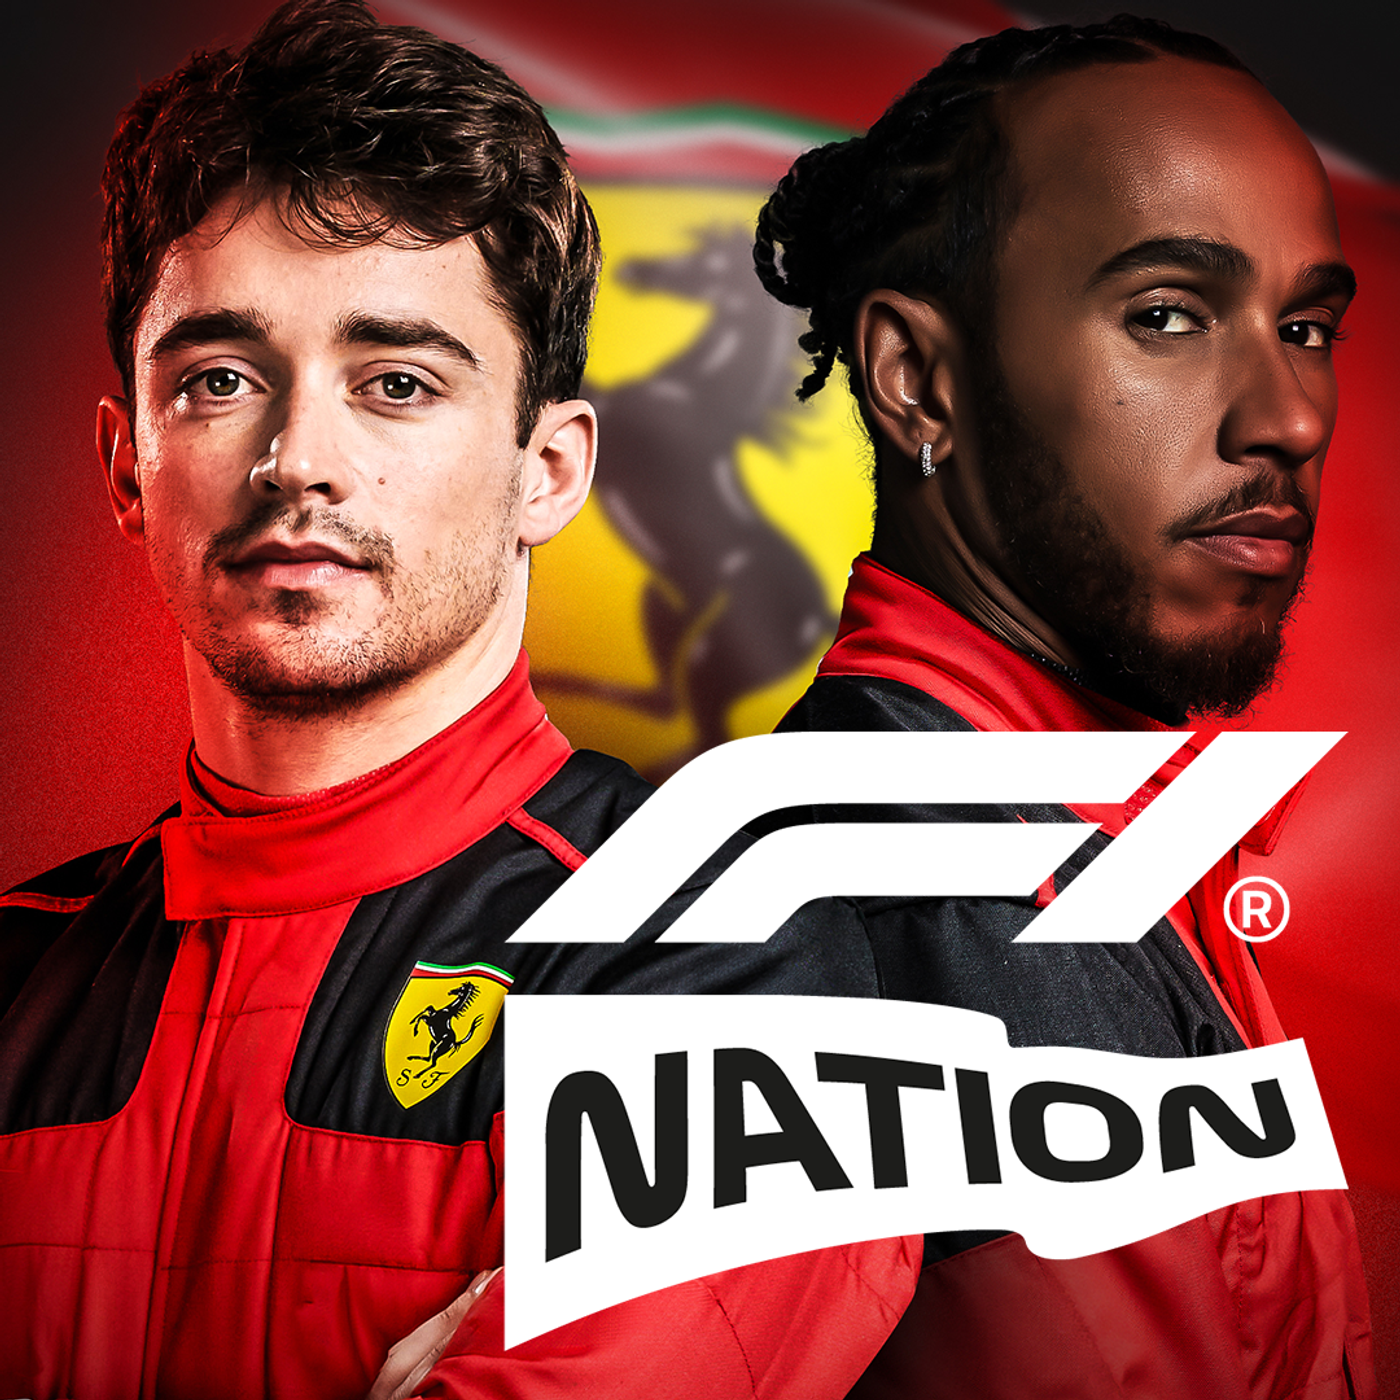 F1 Nation - Lewis Hamilton to Ferrari: the inside story